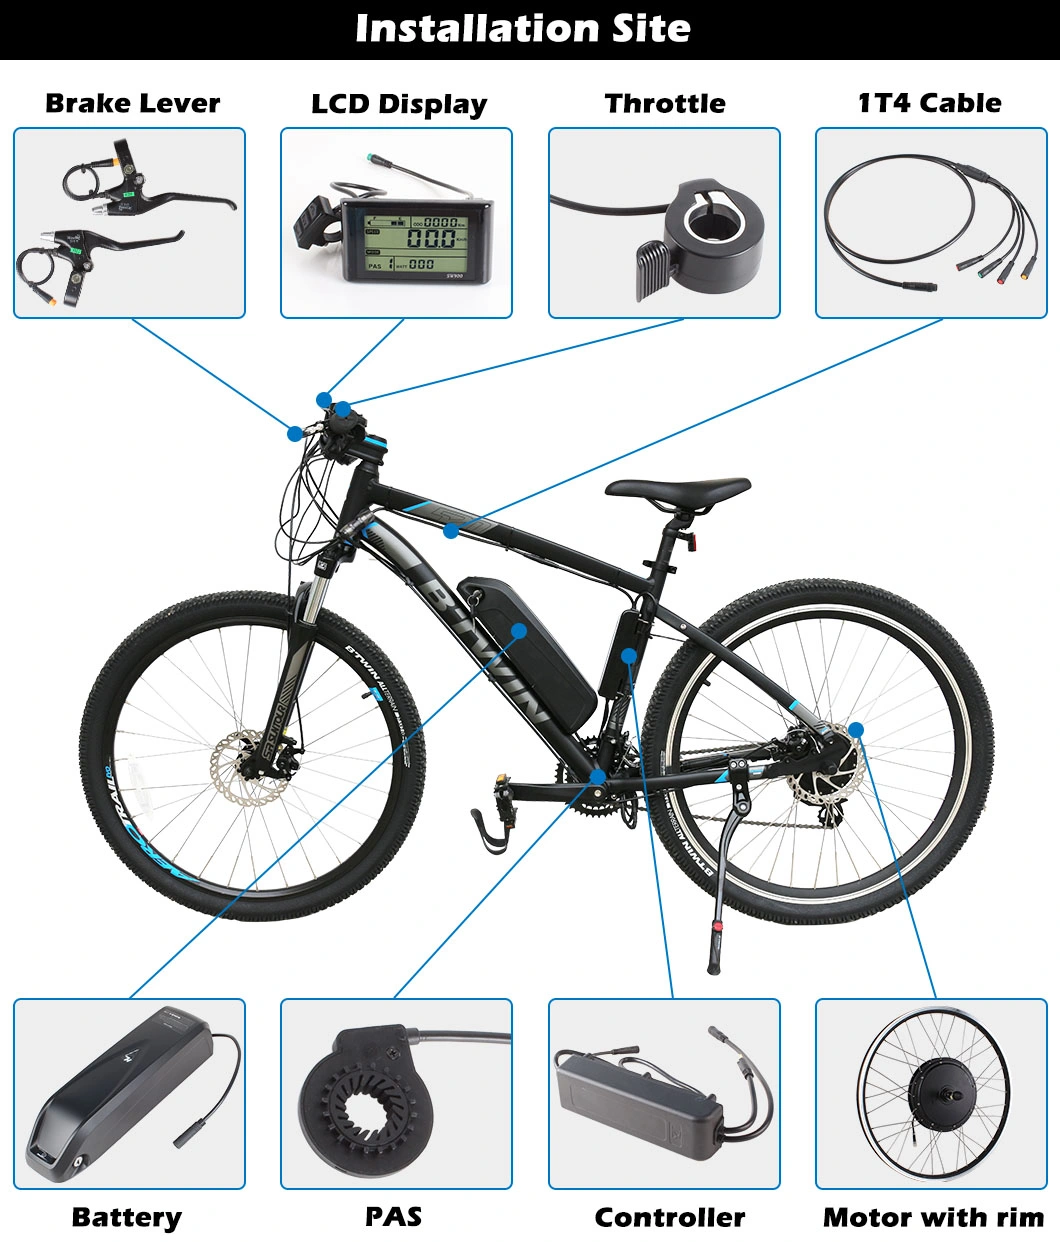 1000 Watt Brushless Direct Motor Ebike Kit for DIY Bike with IP54 Water Proof Grade